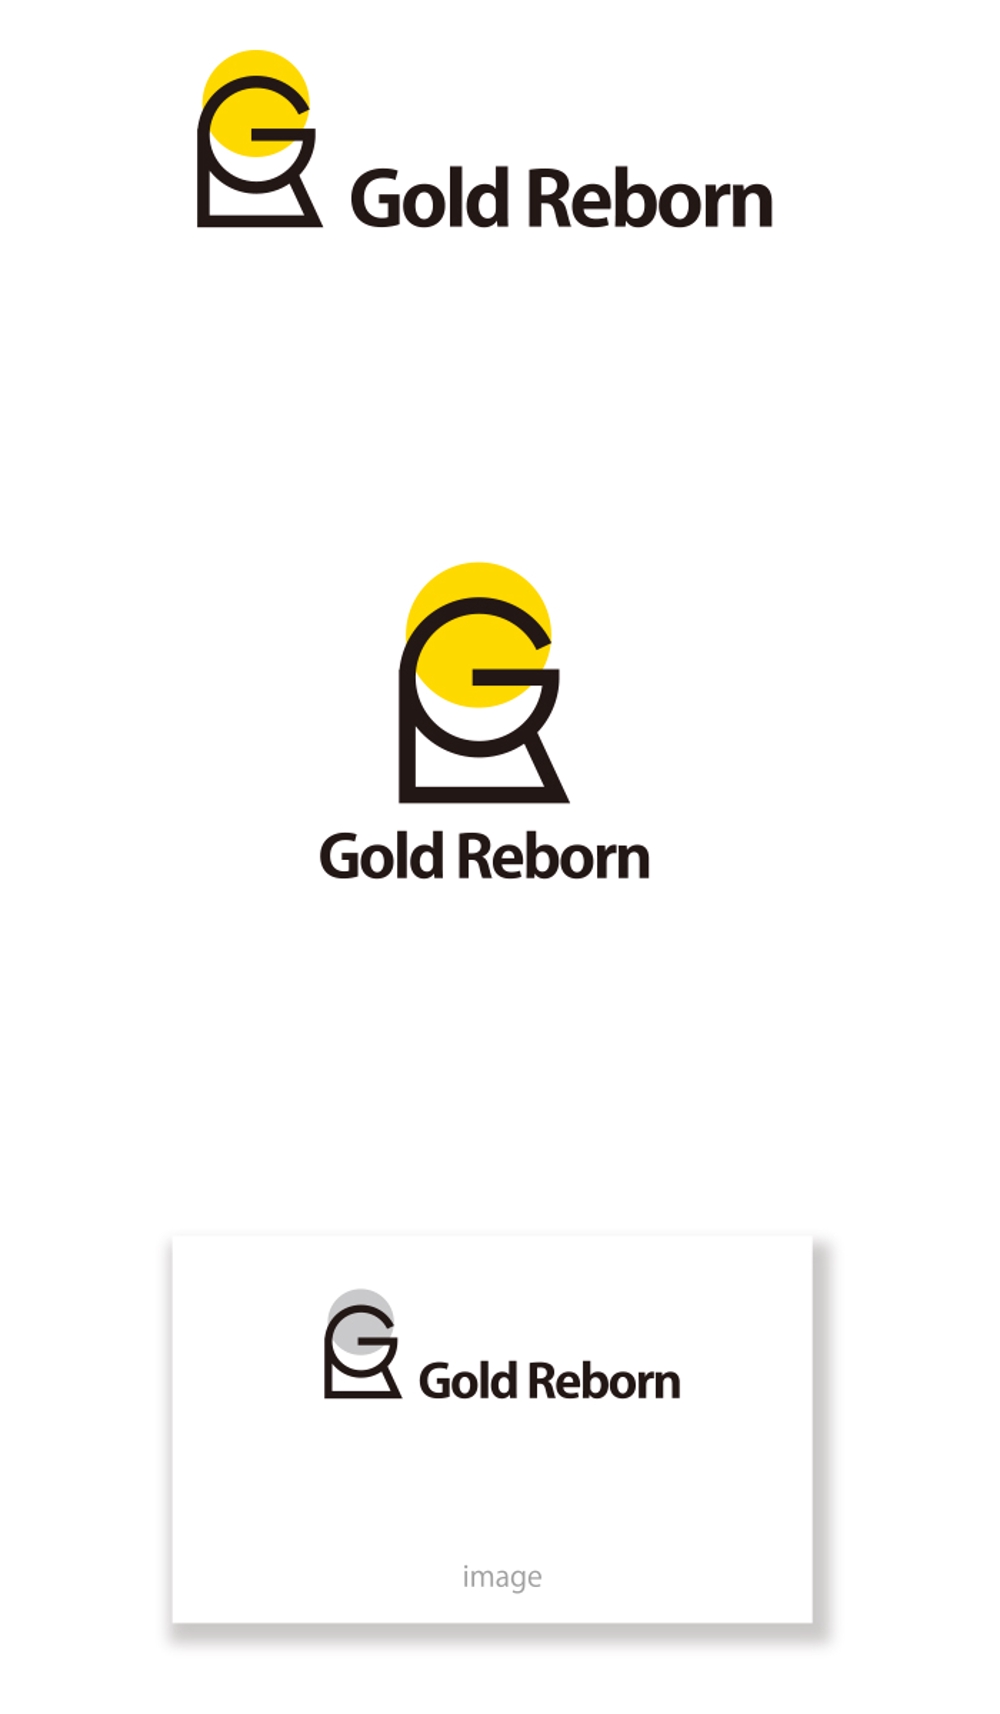 Gold Reborn logo_serve.jpg